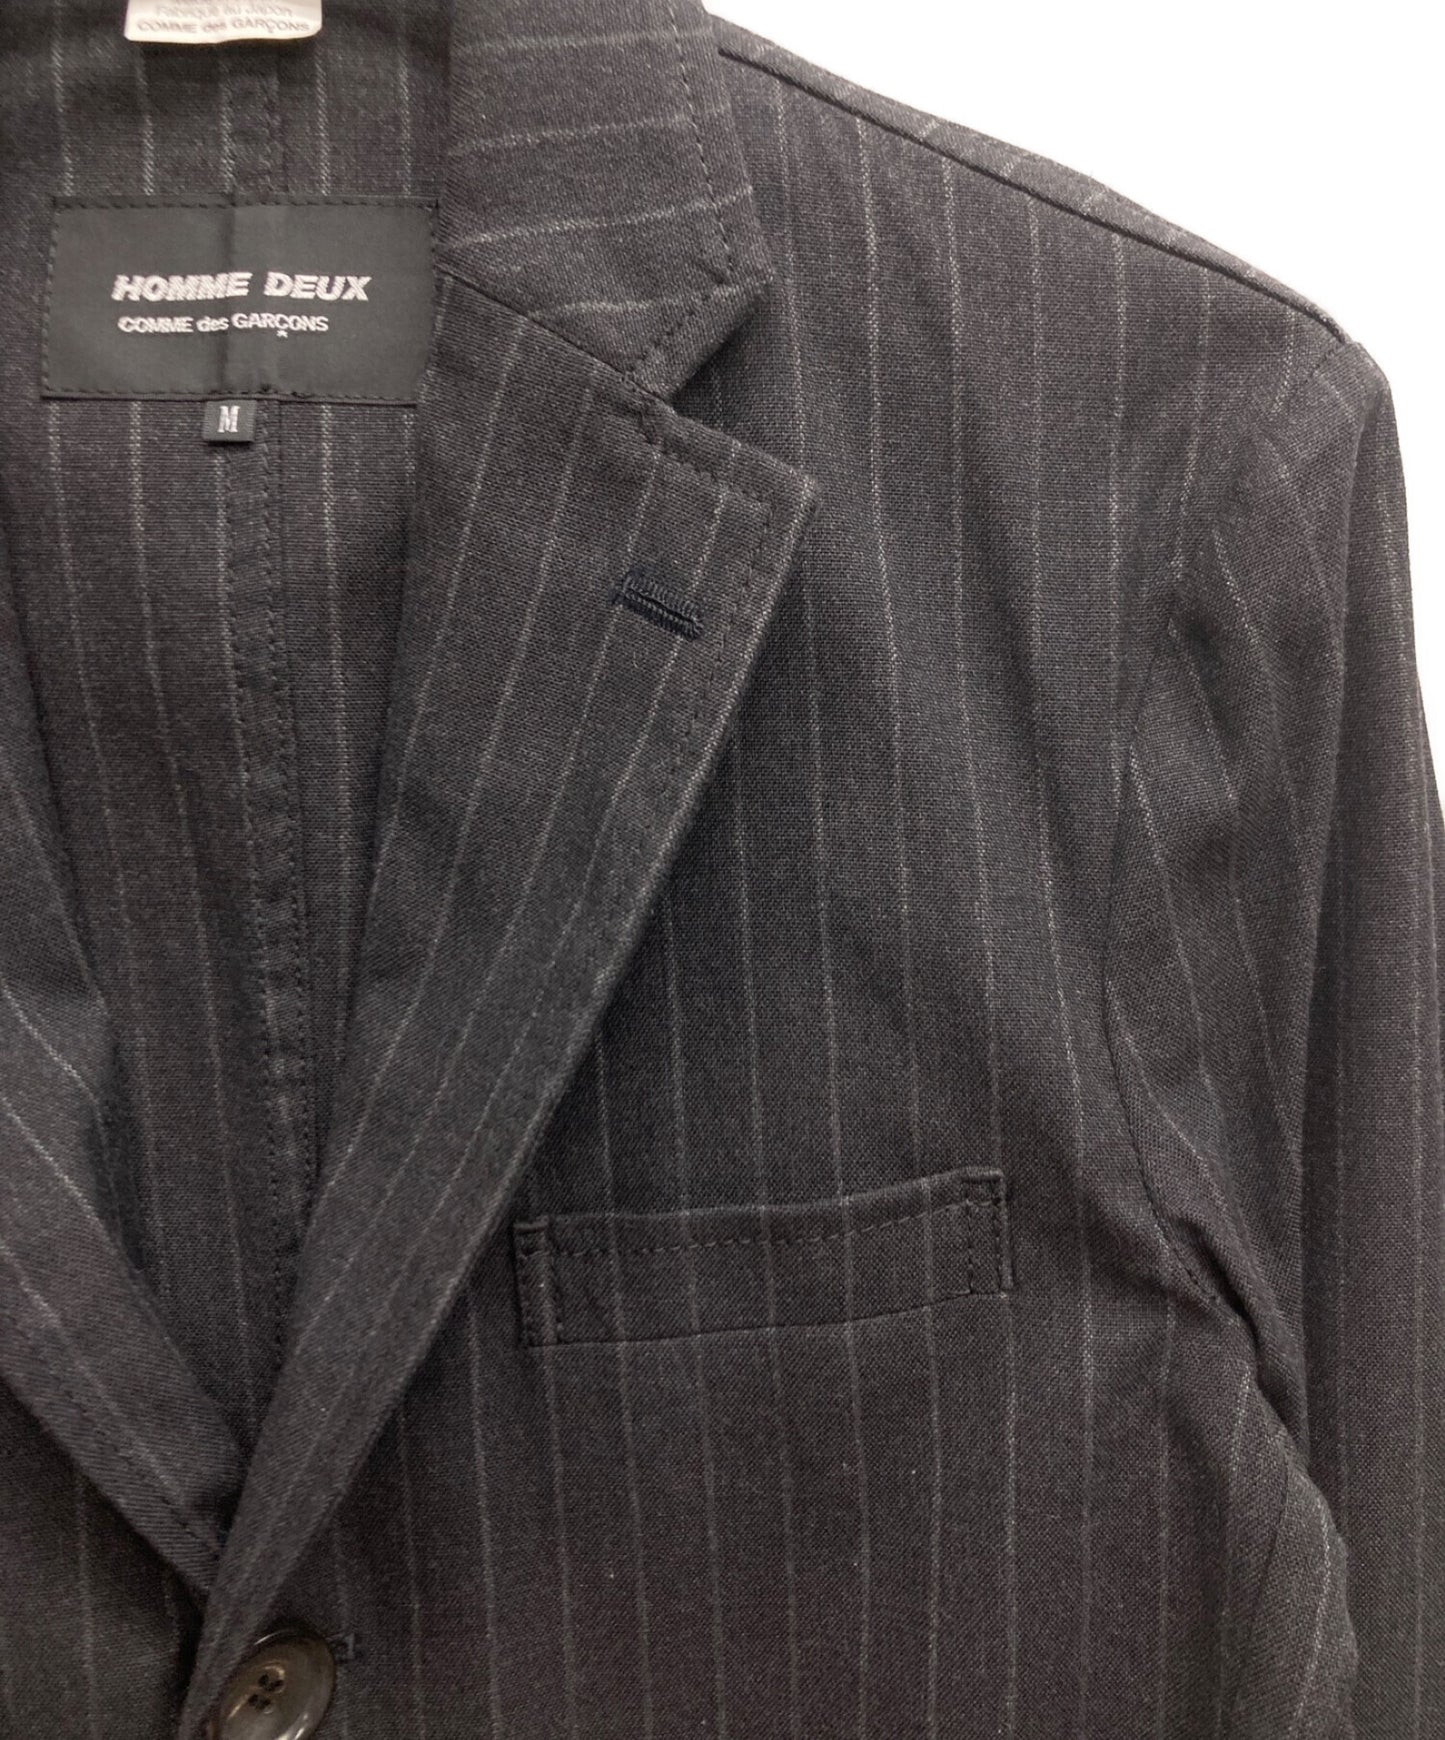 [Pre-owned] COMME des GARCONS HOMME DEUX 3B Striped Tailored Jacket DI-J048